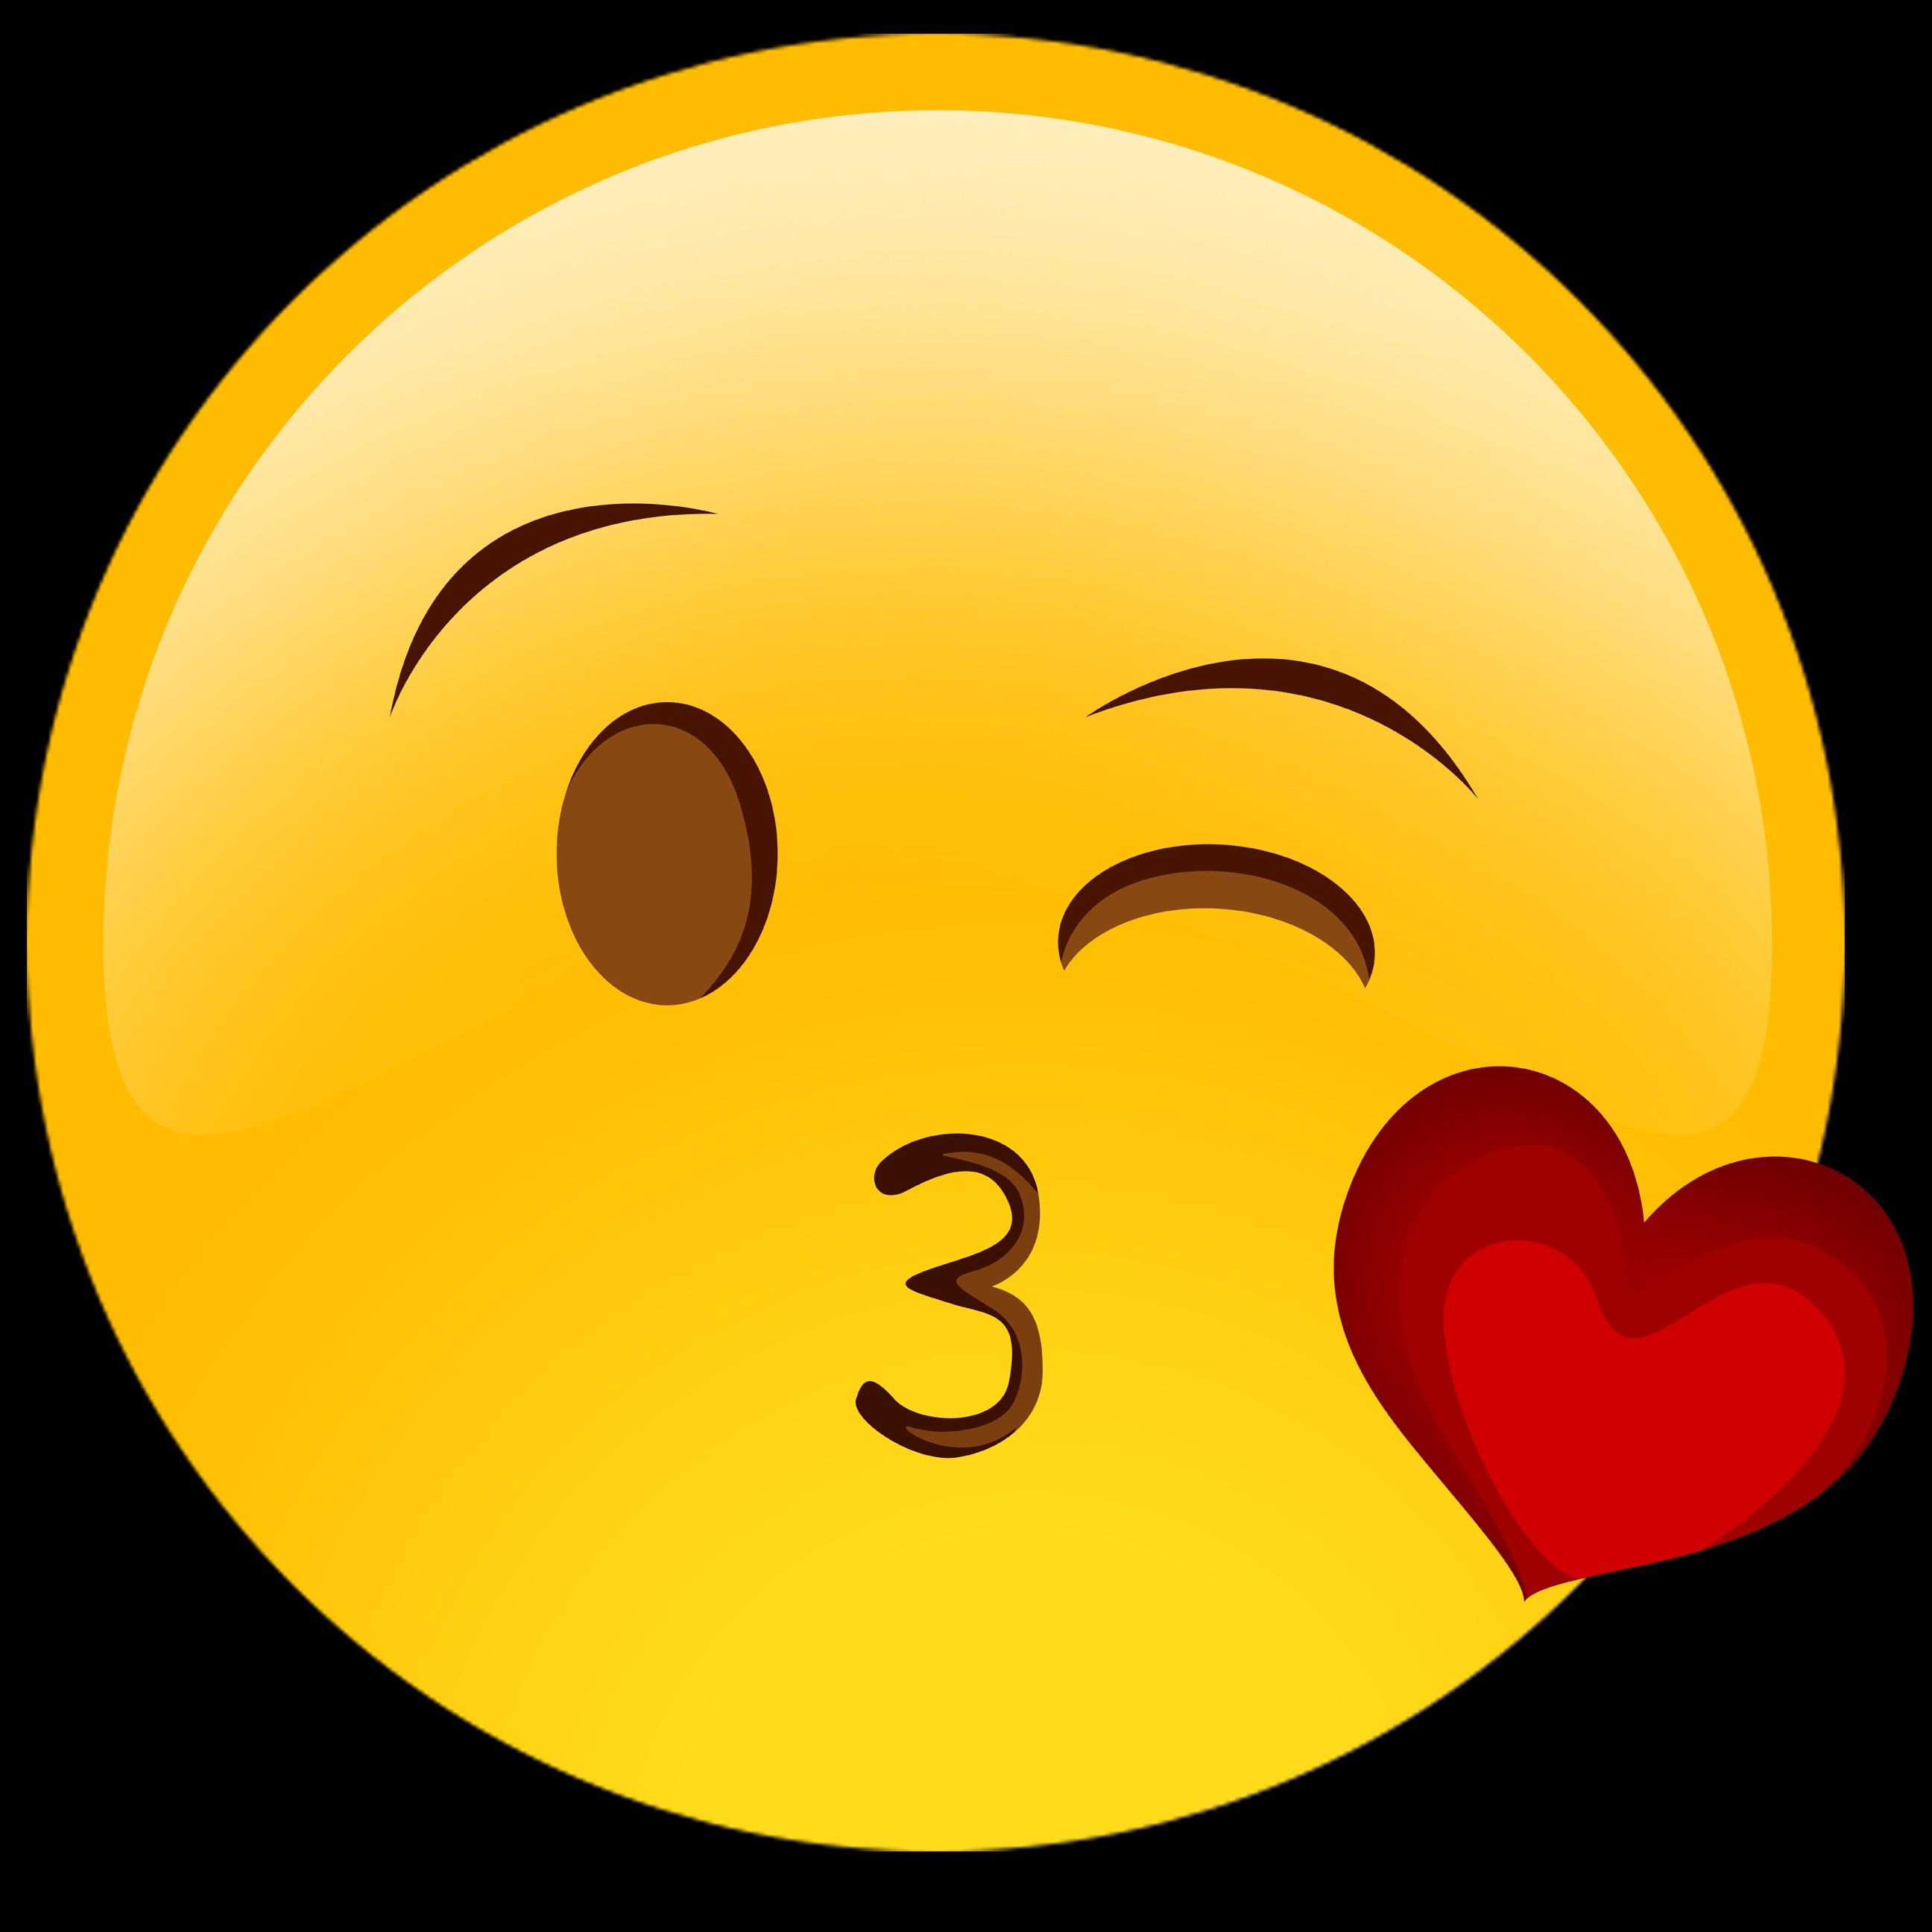 Kiss Emoji Wallpapers - Top Free Kiss Emoji Backgrounds - WallpaperAccess